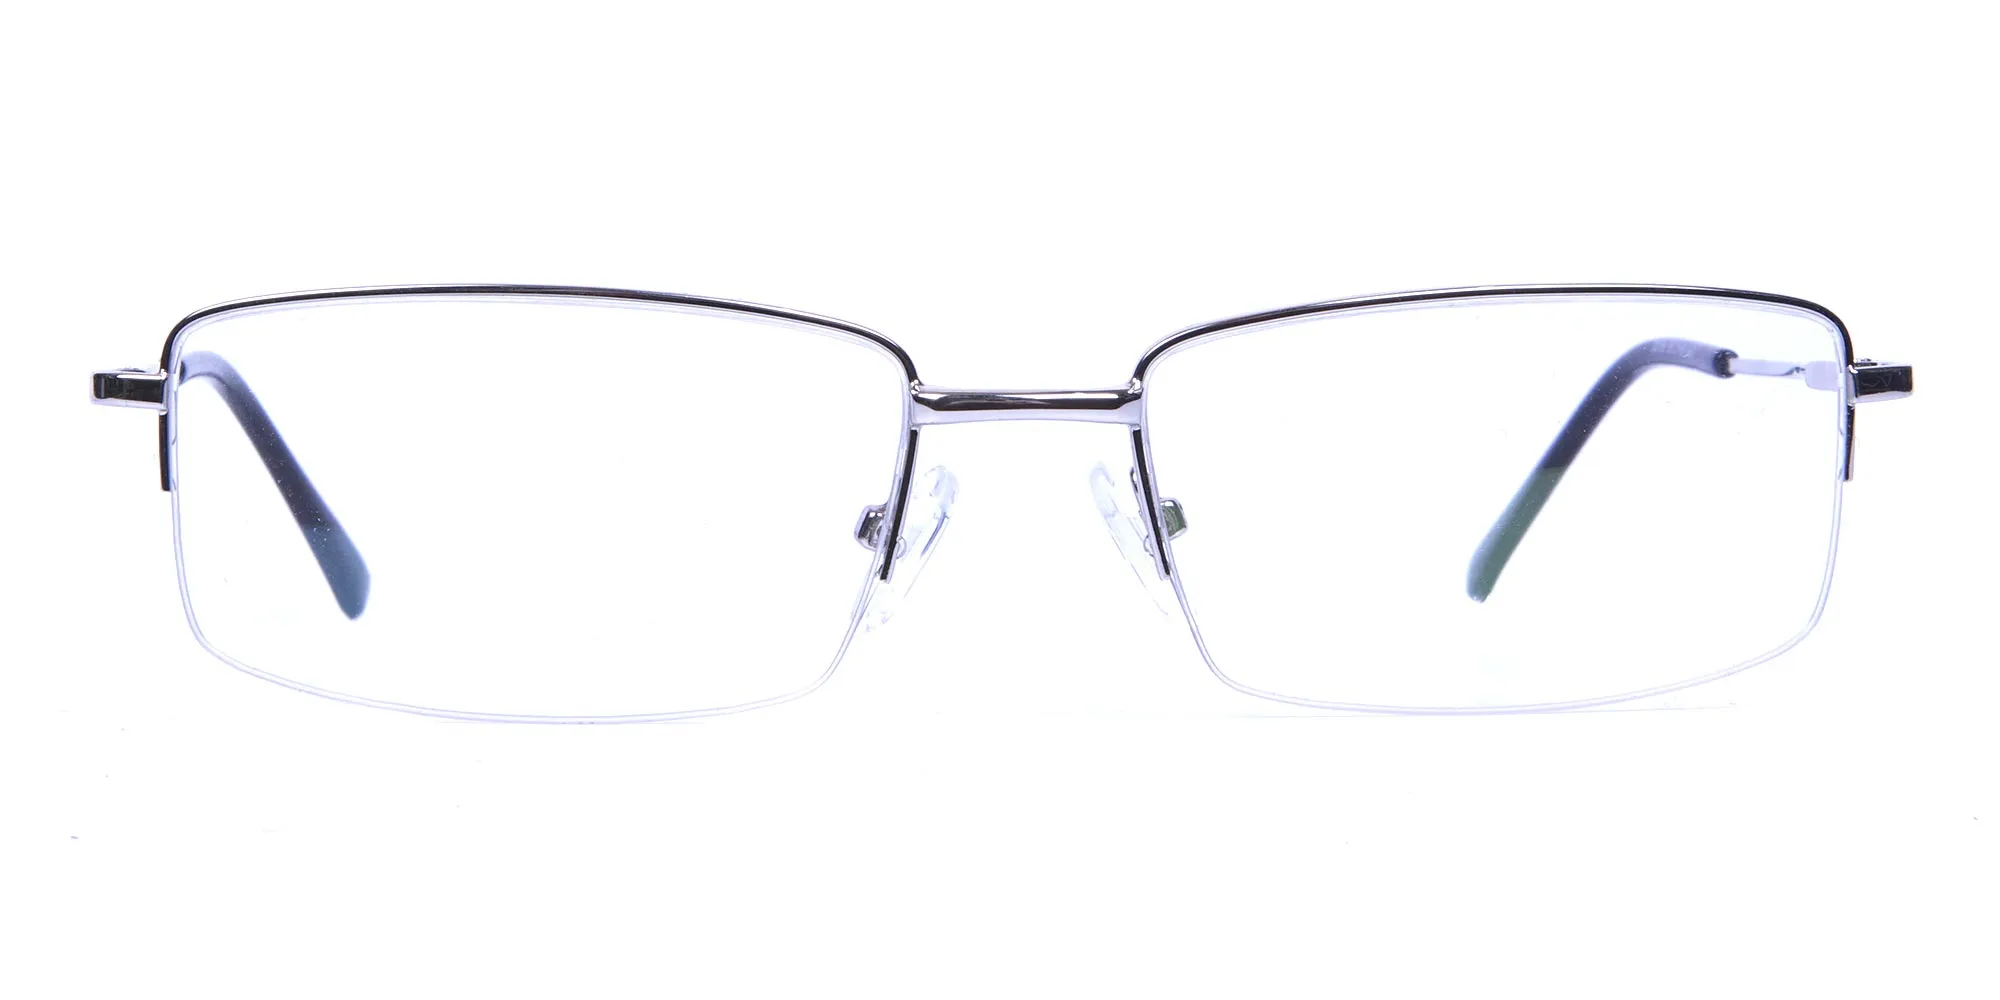 Rectangular glasses in Silver - 2